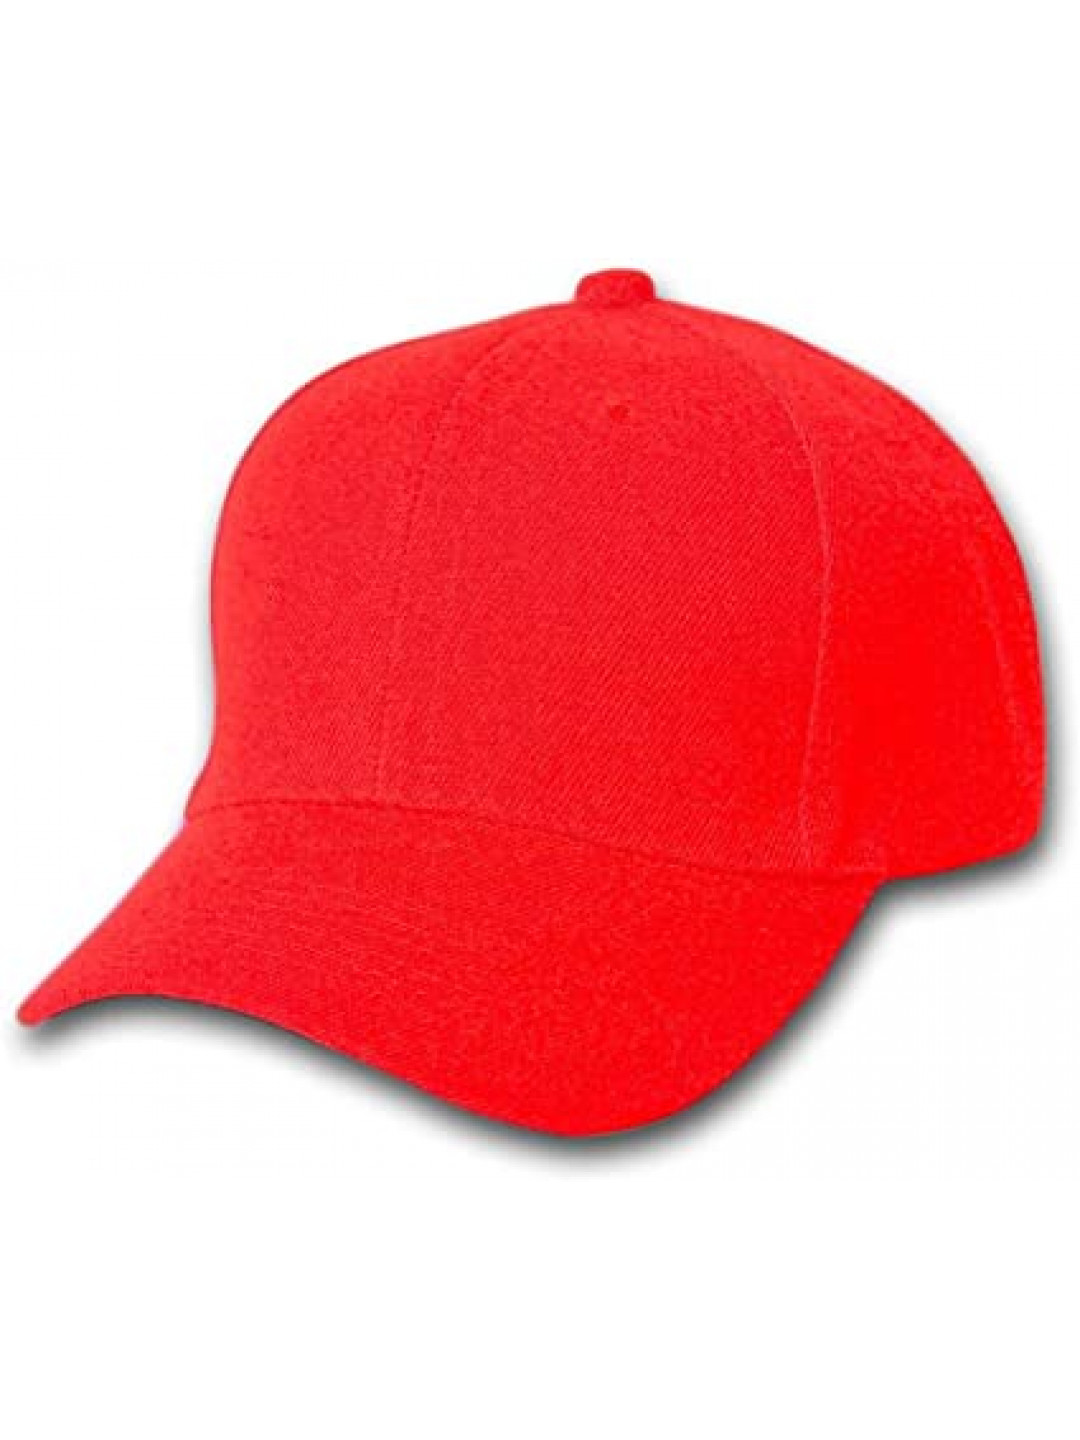 Buy in Nigeria plain red baseball cap in bulk and retail | on ...